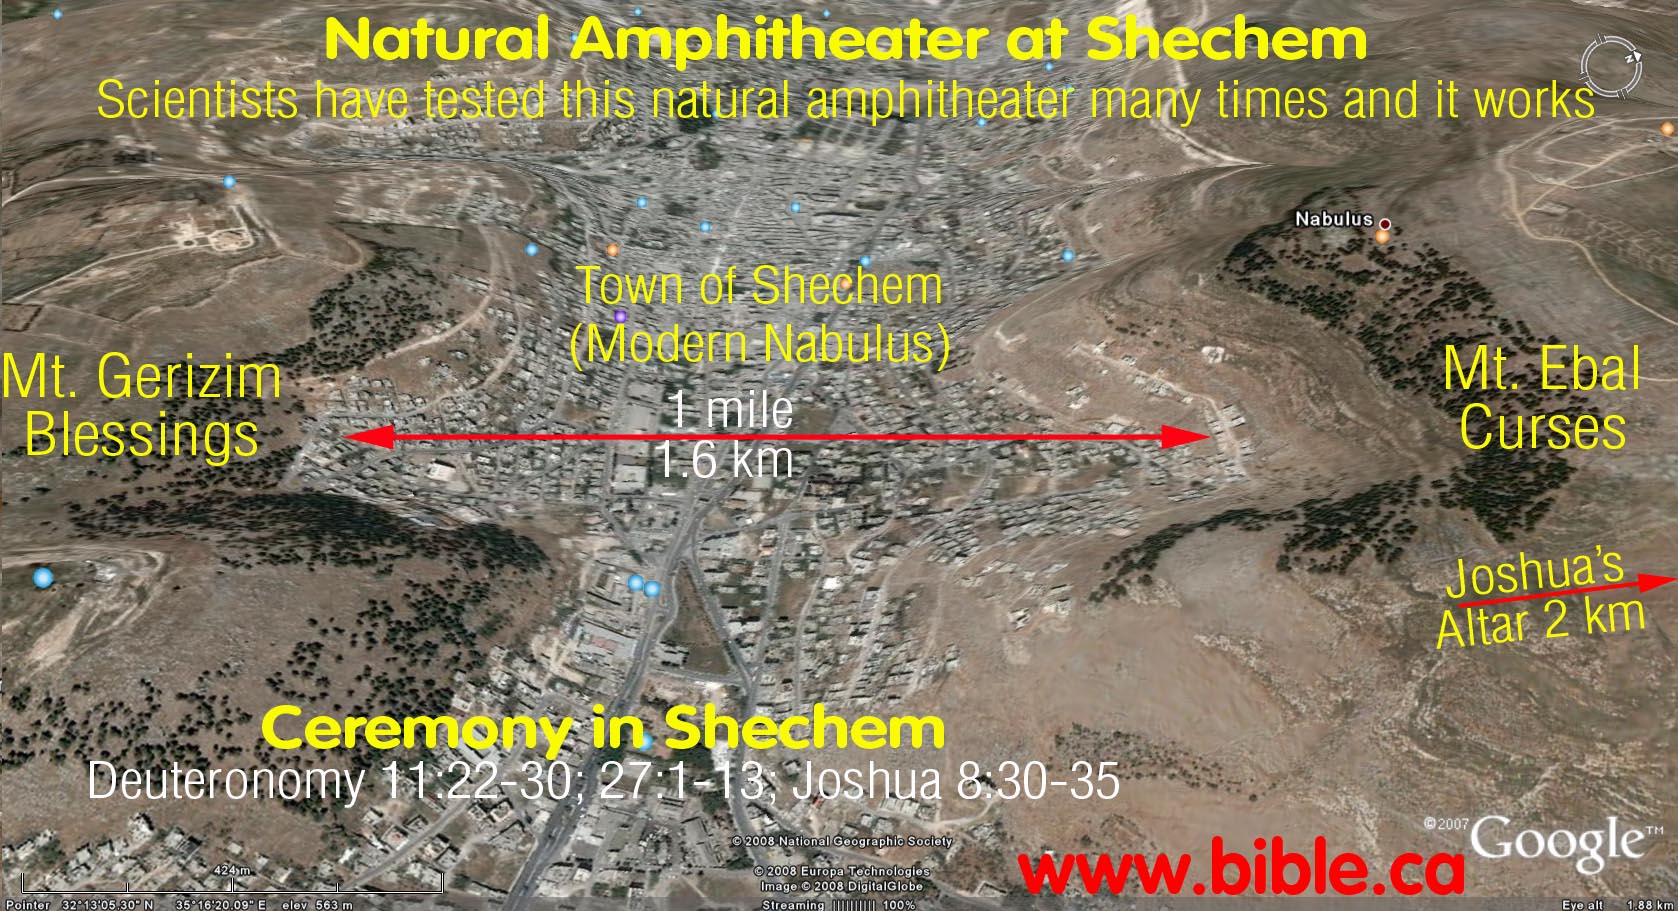 Bible Archaeology Altar of Joshua Amphitheater between Mt. Gerizim Ebal